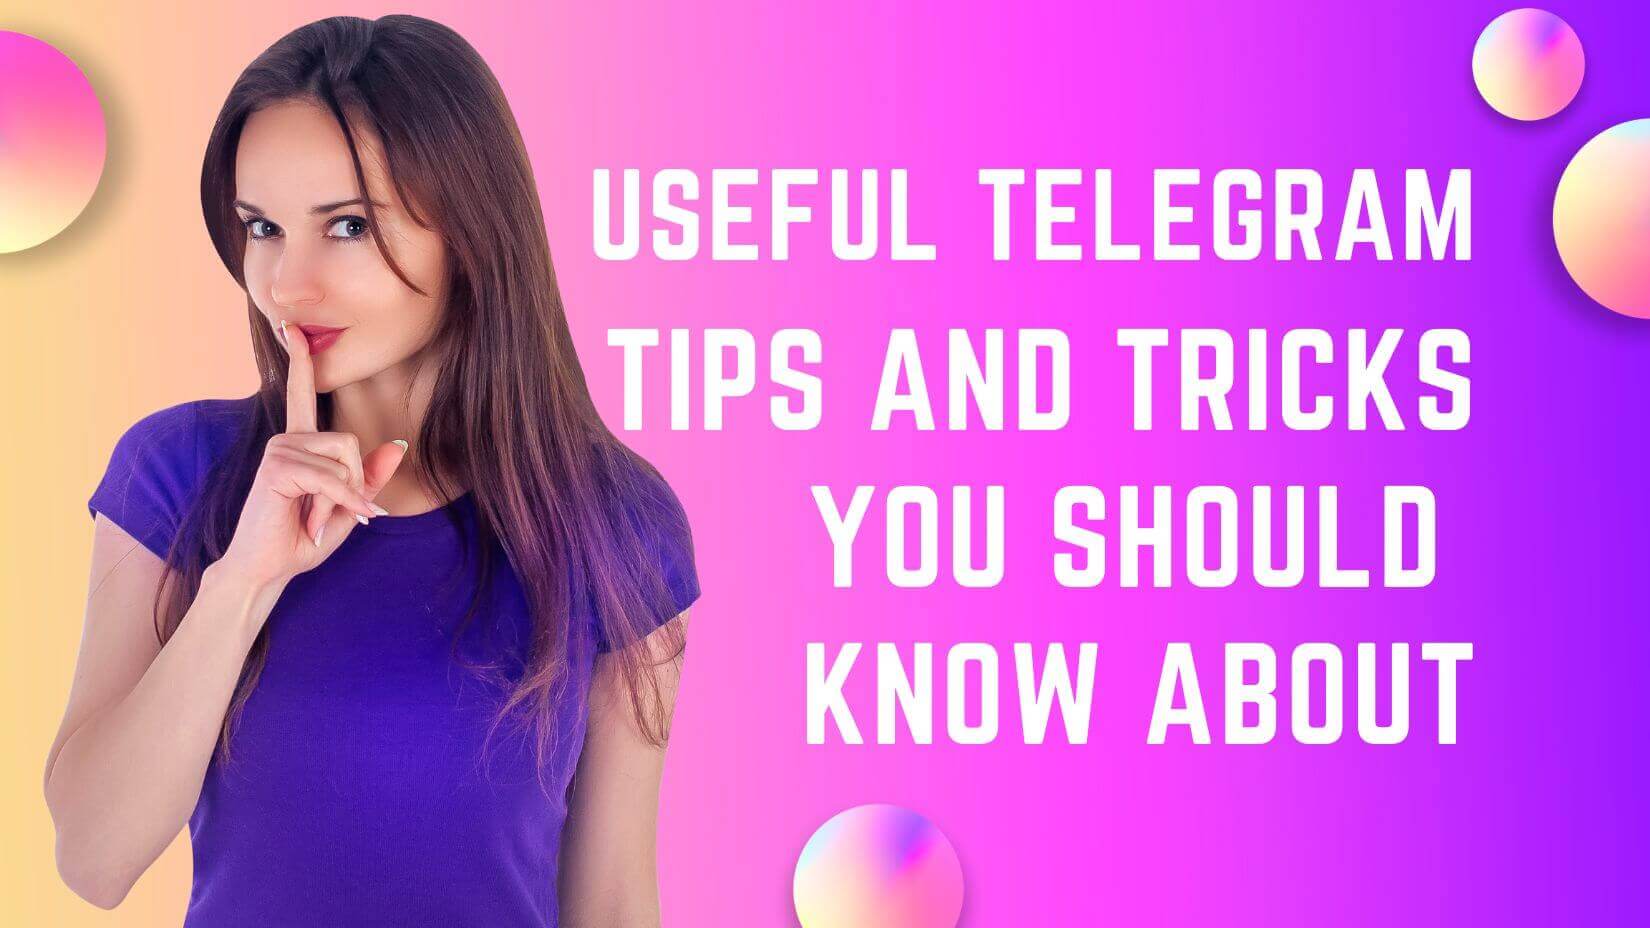 telegram tips and tricks